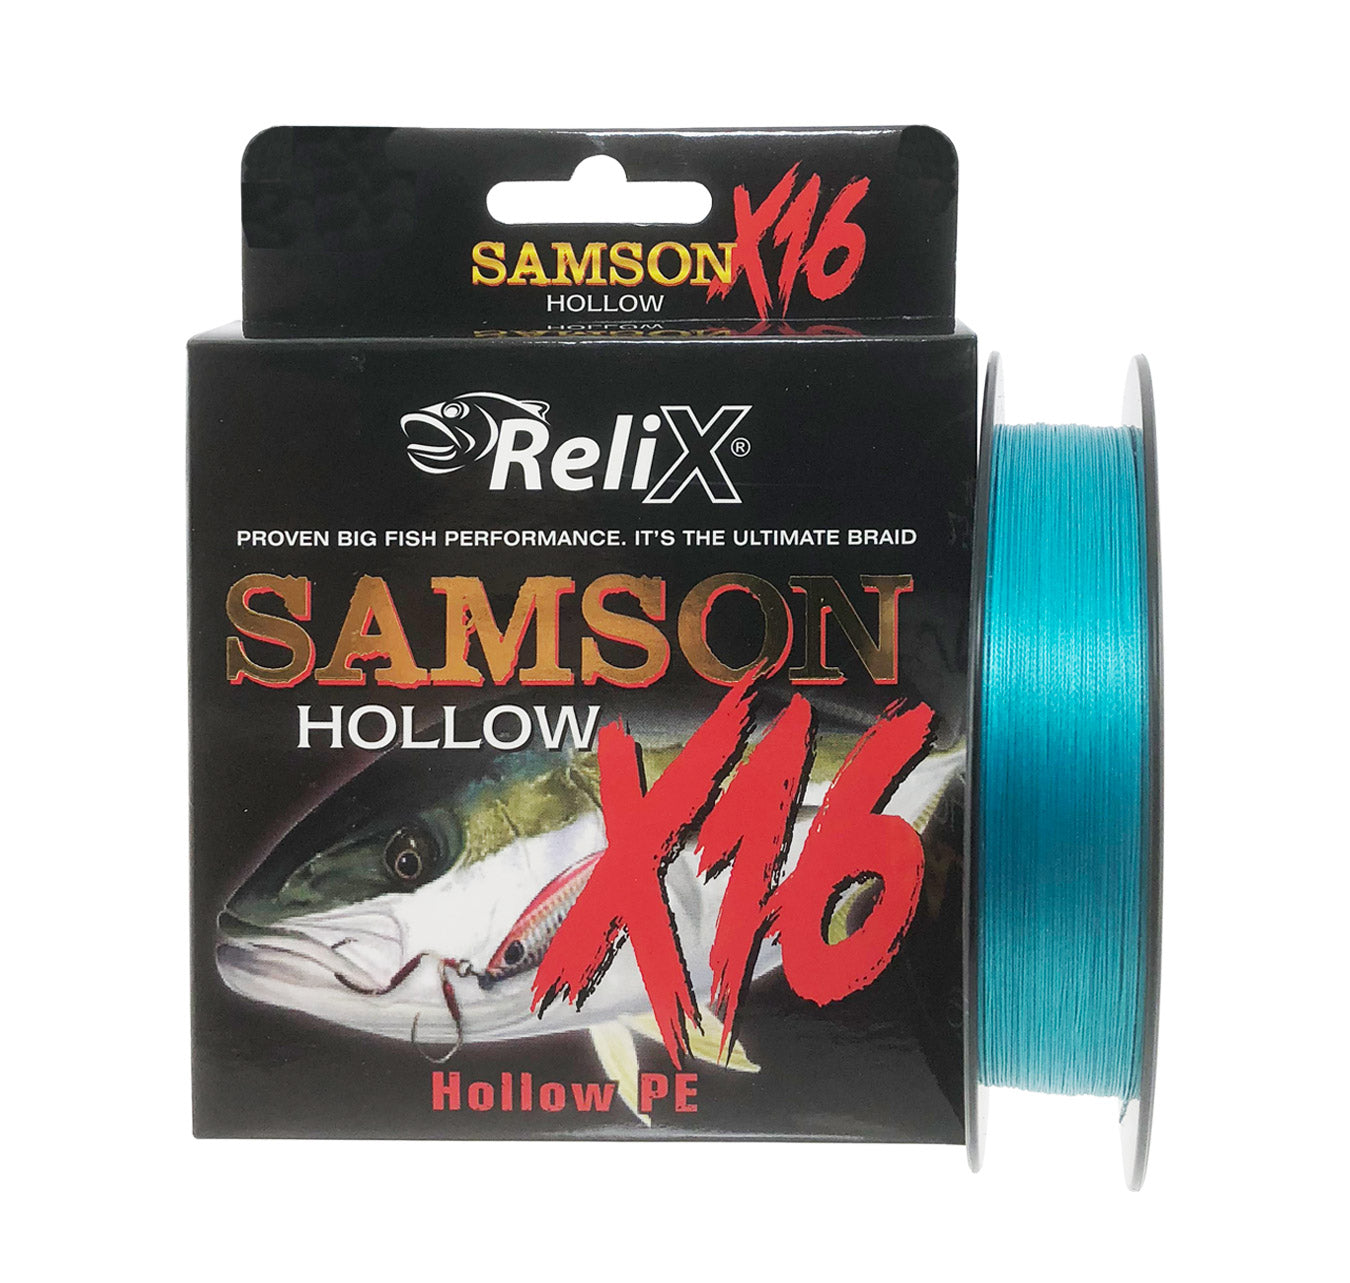 Relix Samson Hollow X16 Braid